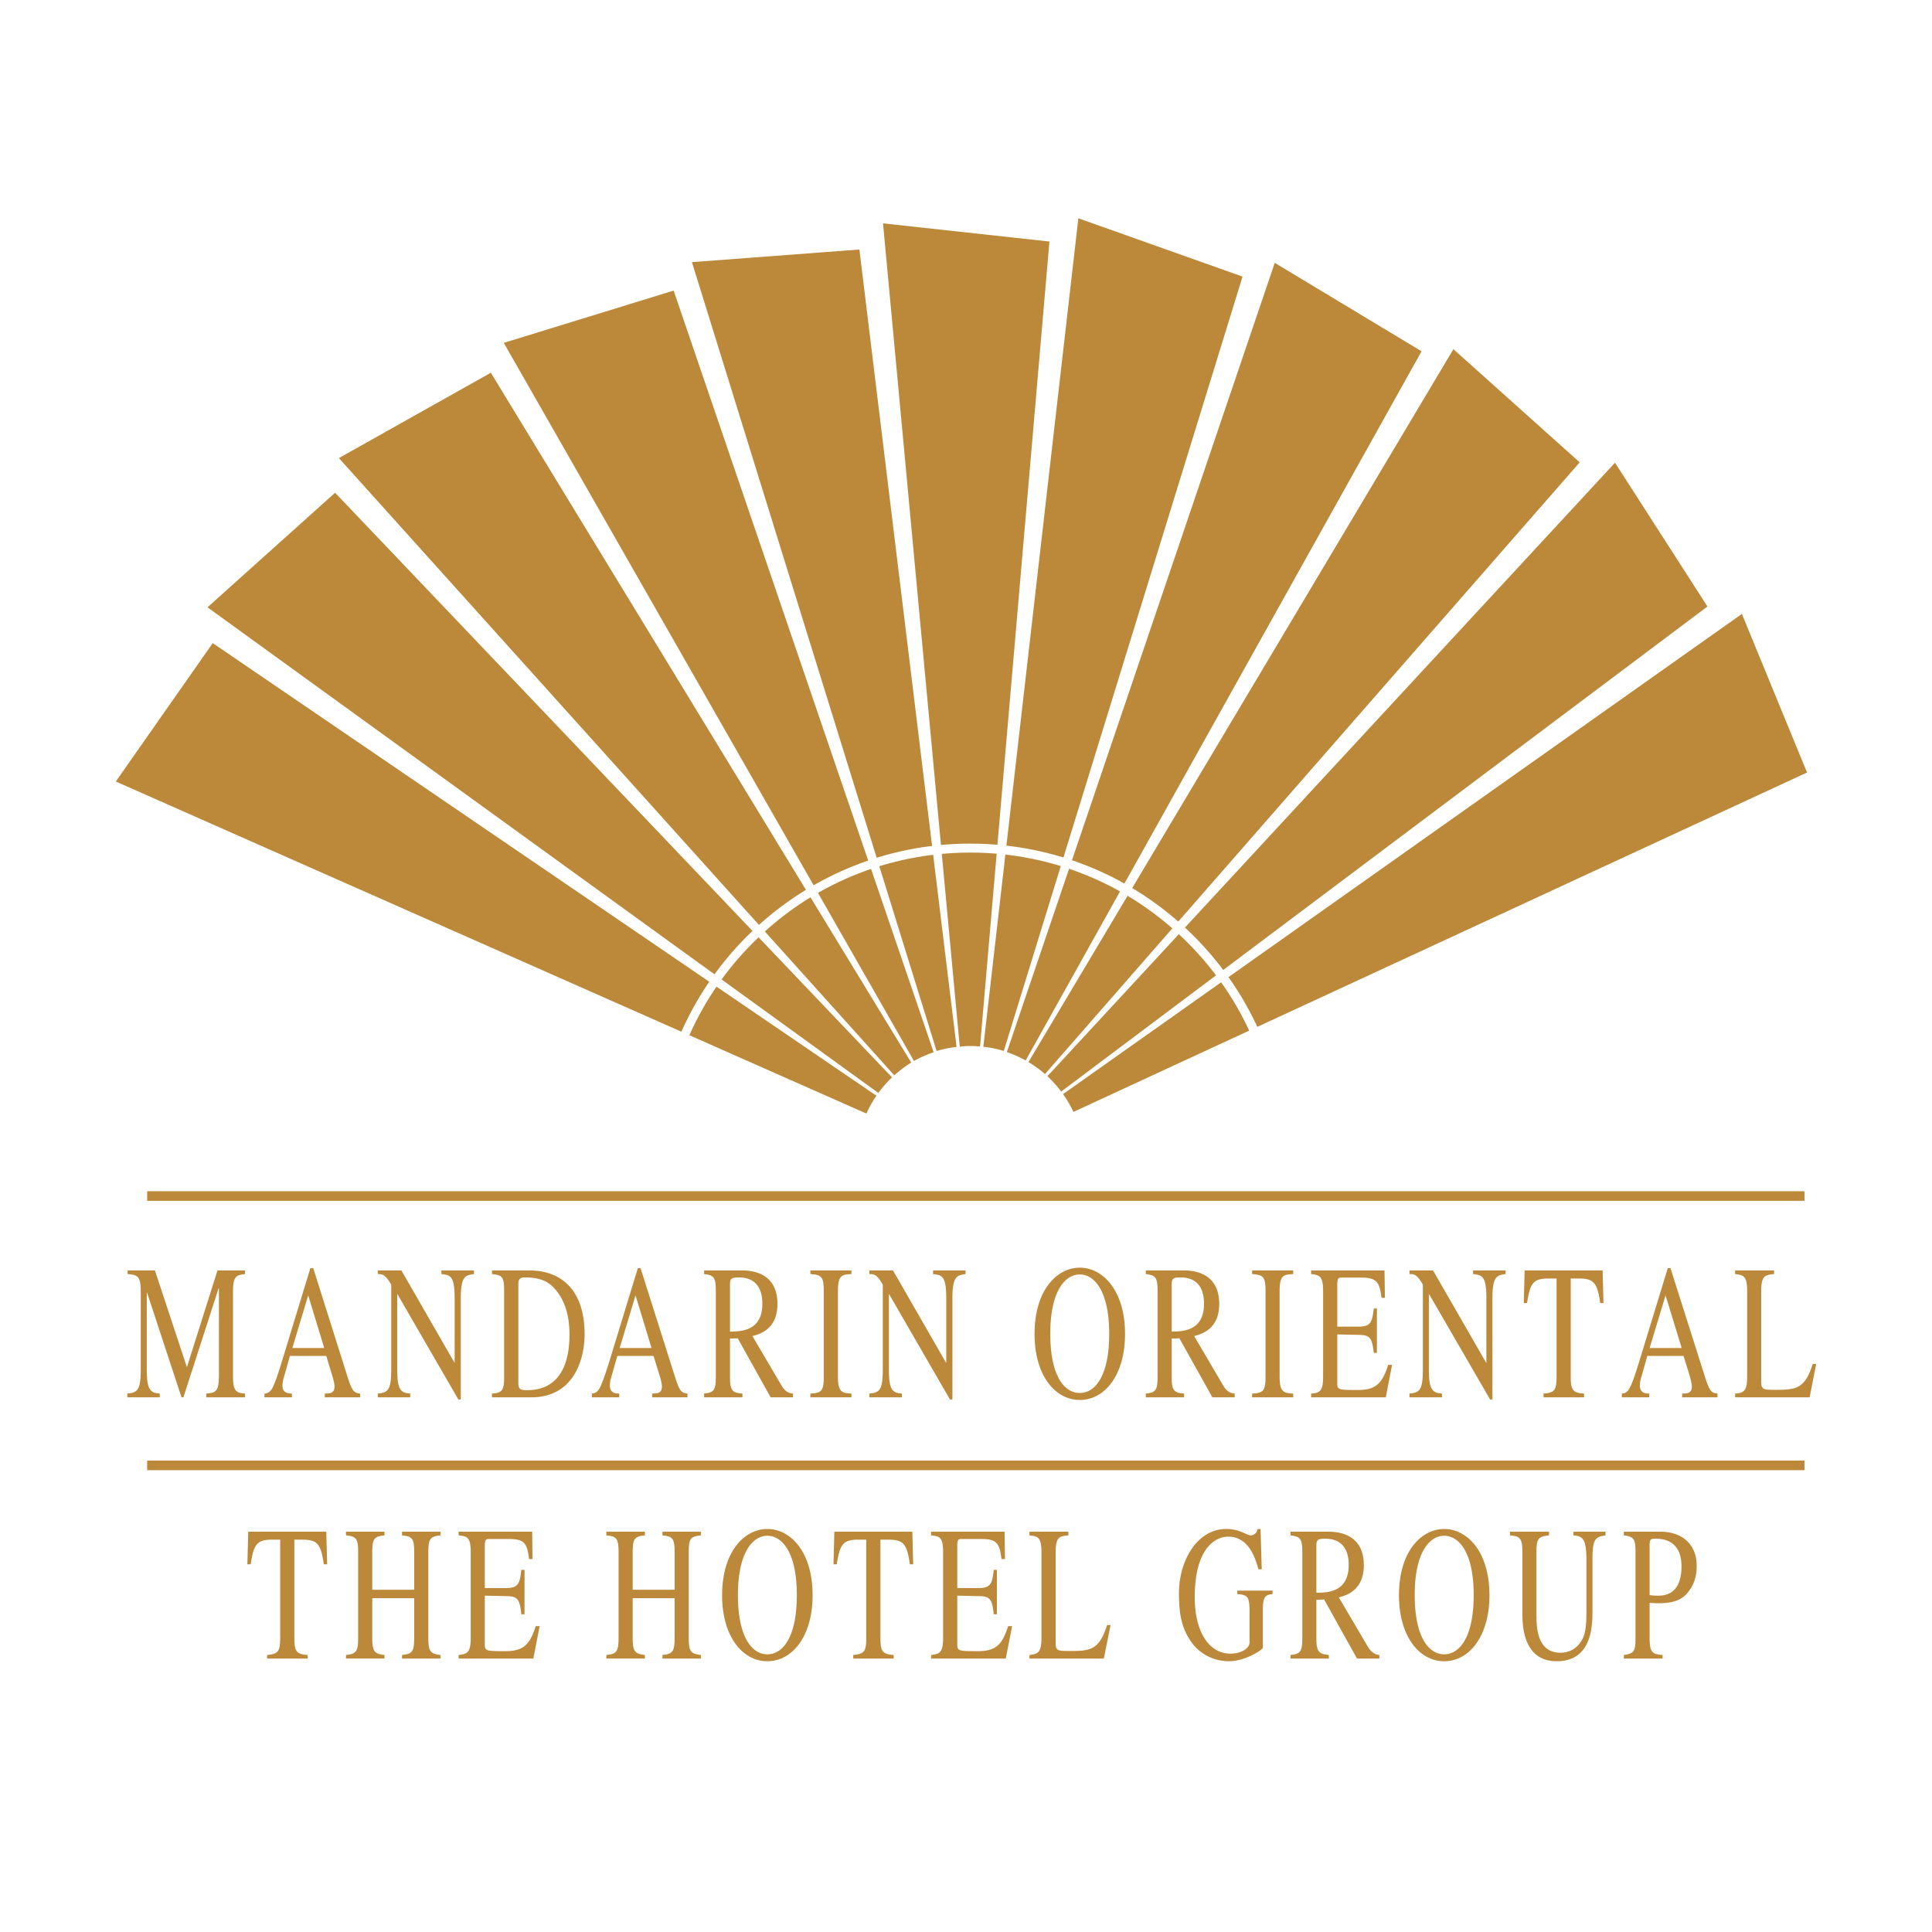 Mandarin Oriental Hotel Group logo colors